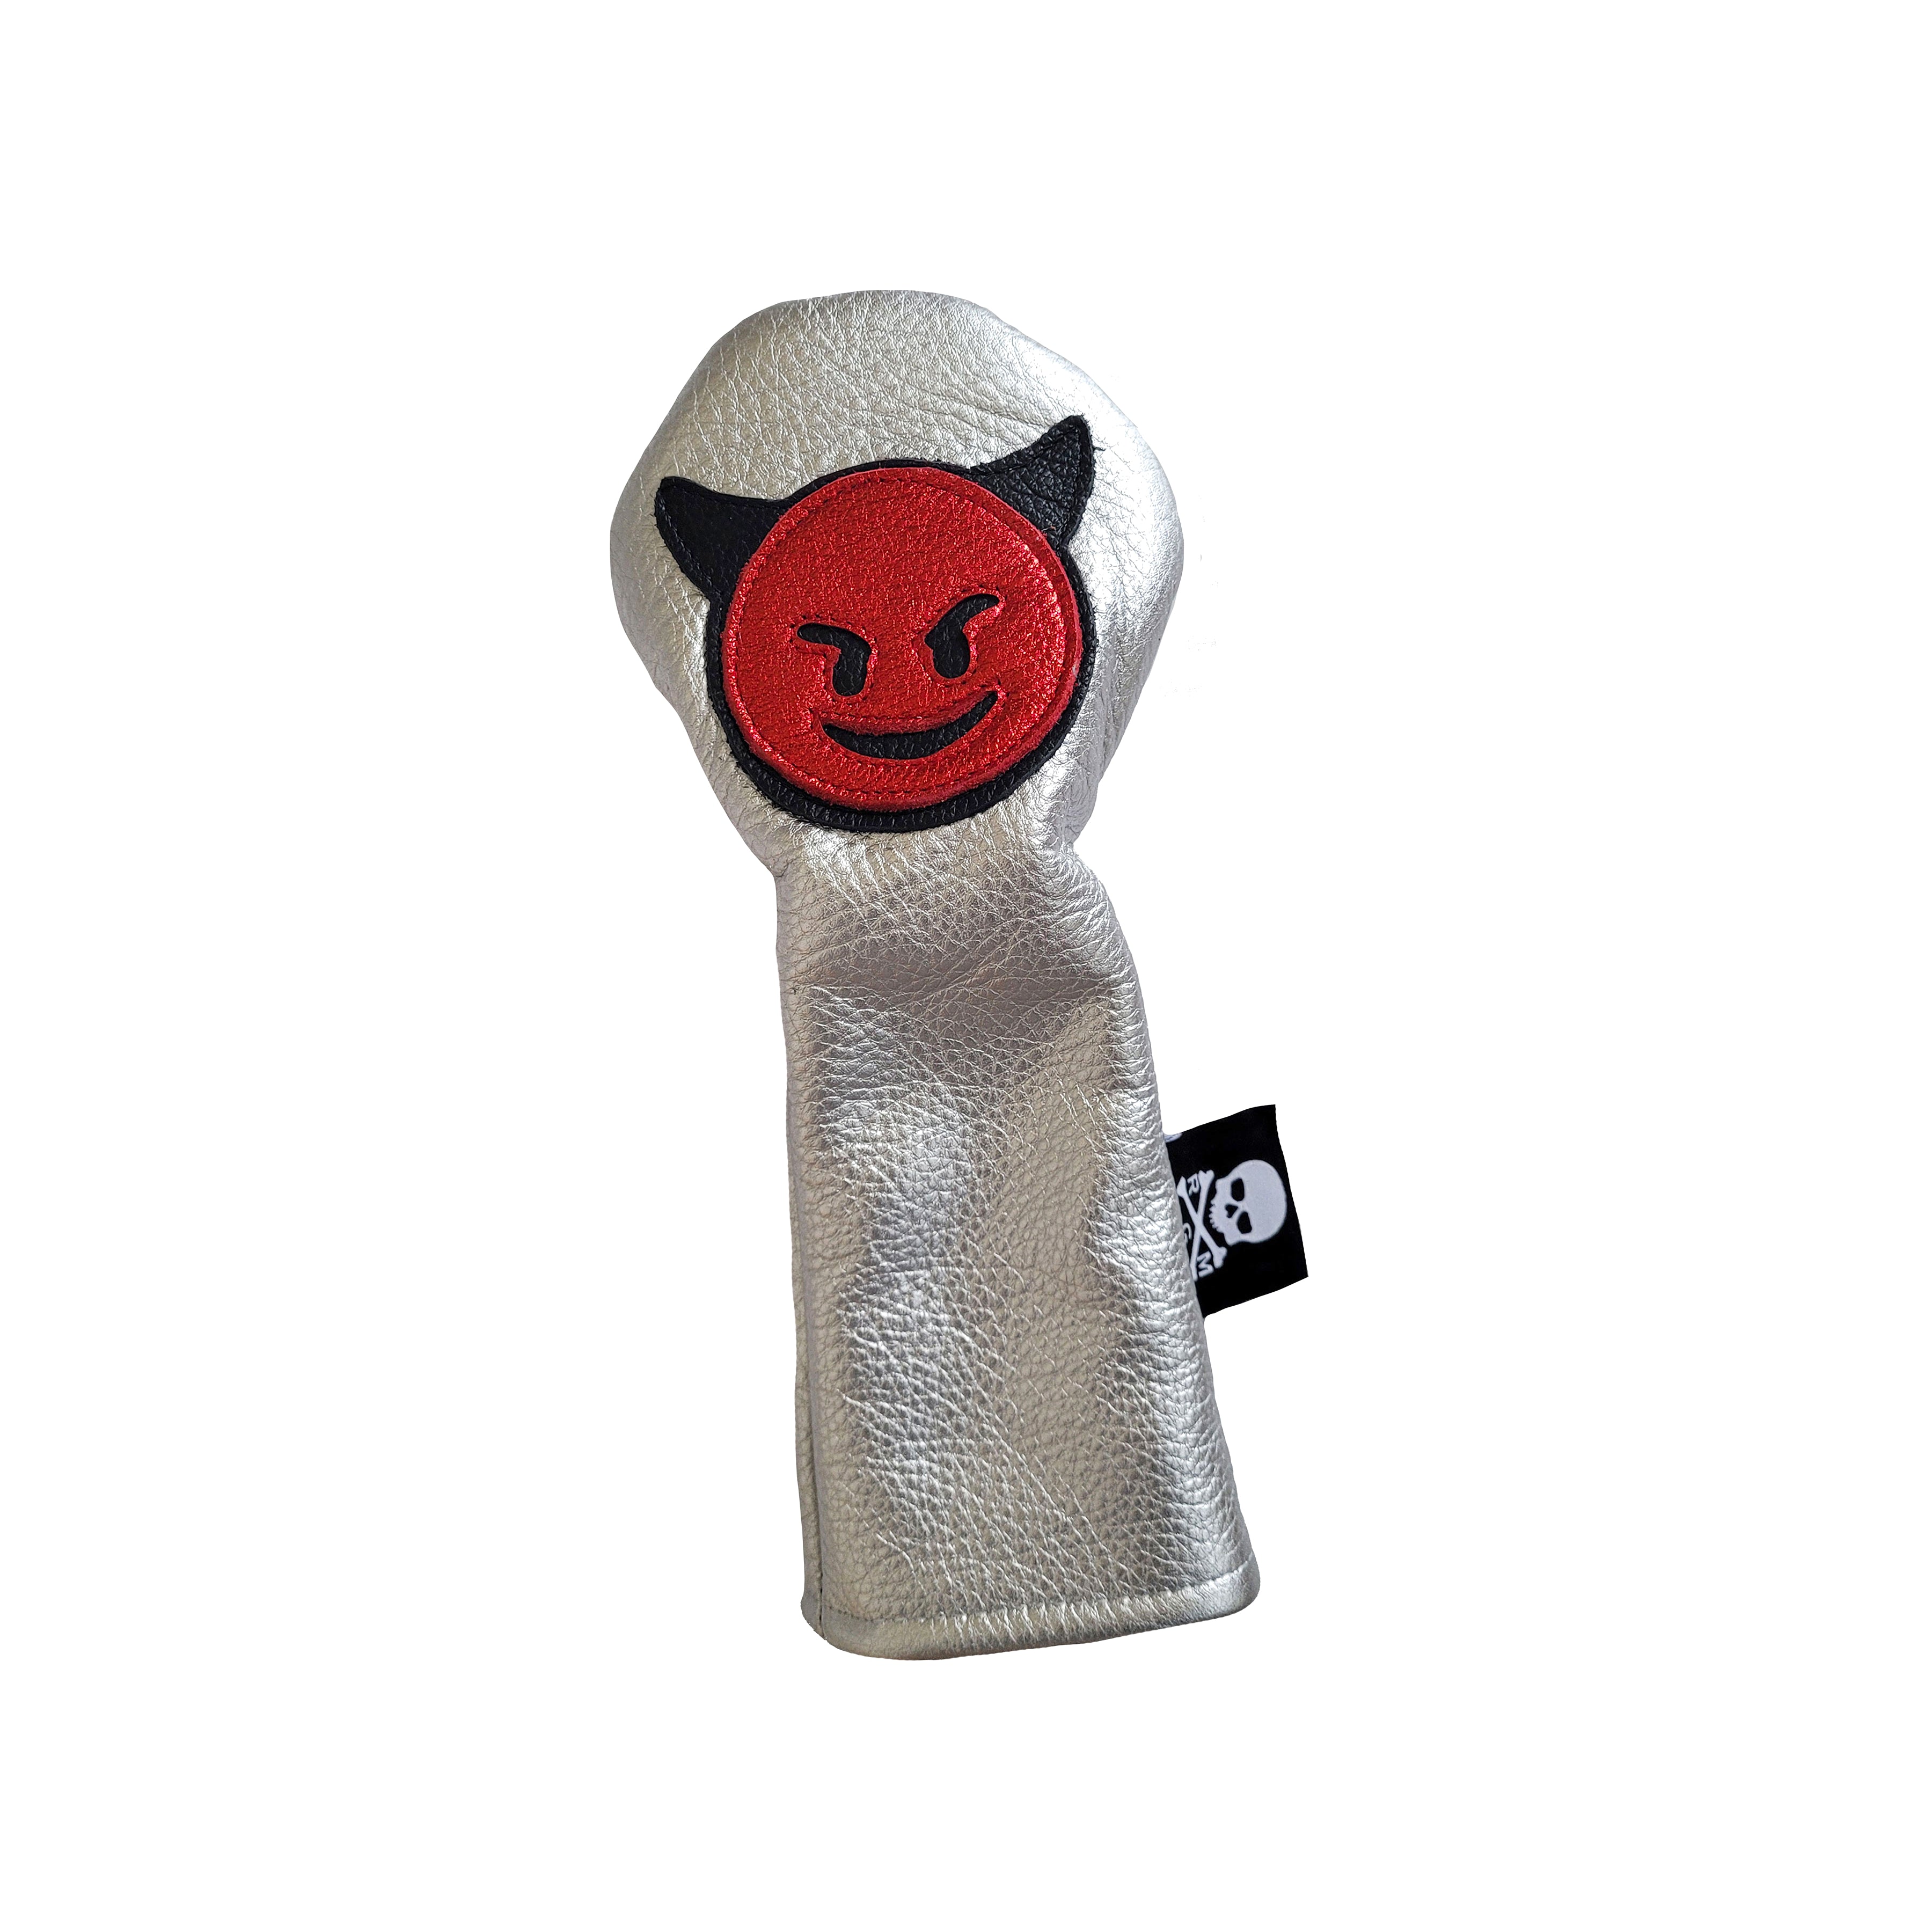 The RMG Demon Emoji Headcover - Robert Mark Golf